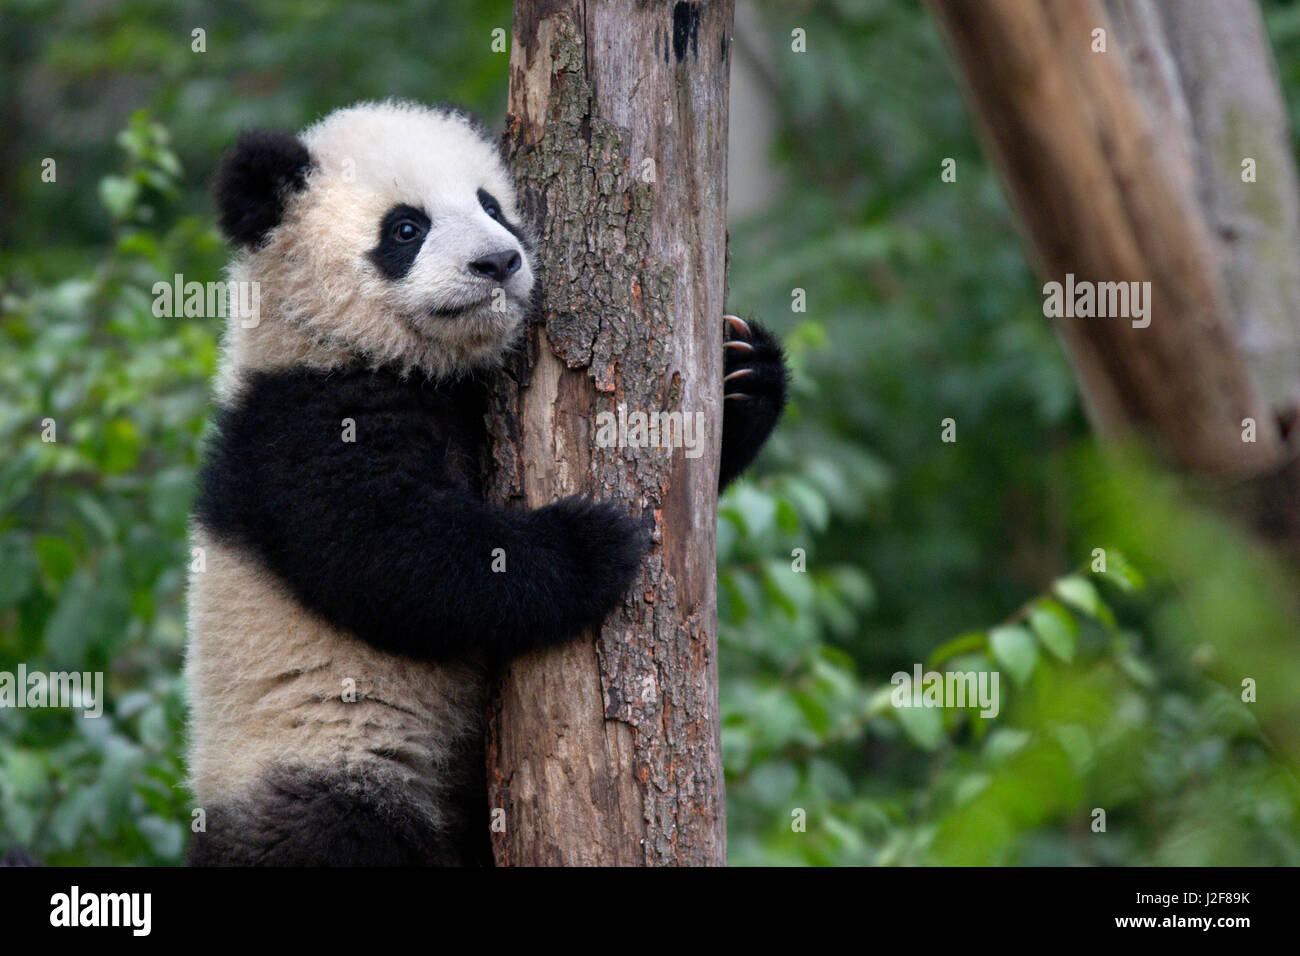 young baby giant panda climbing in a tree Stock Photo